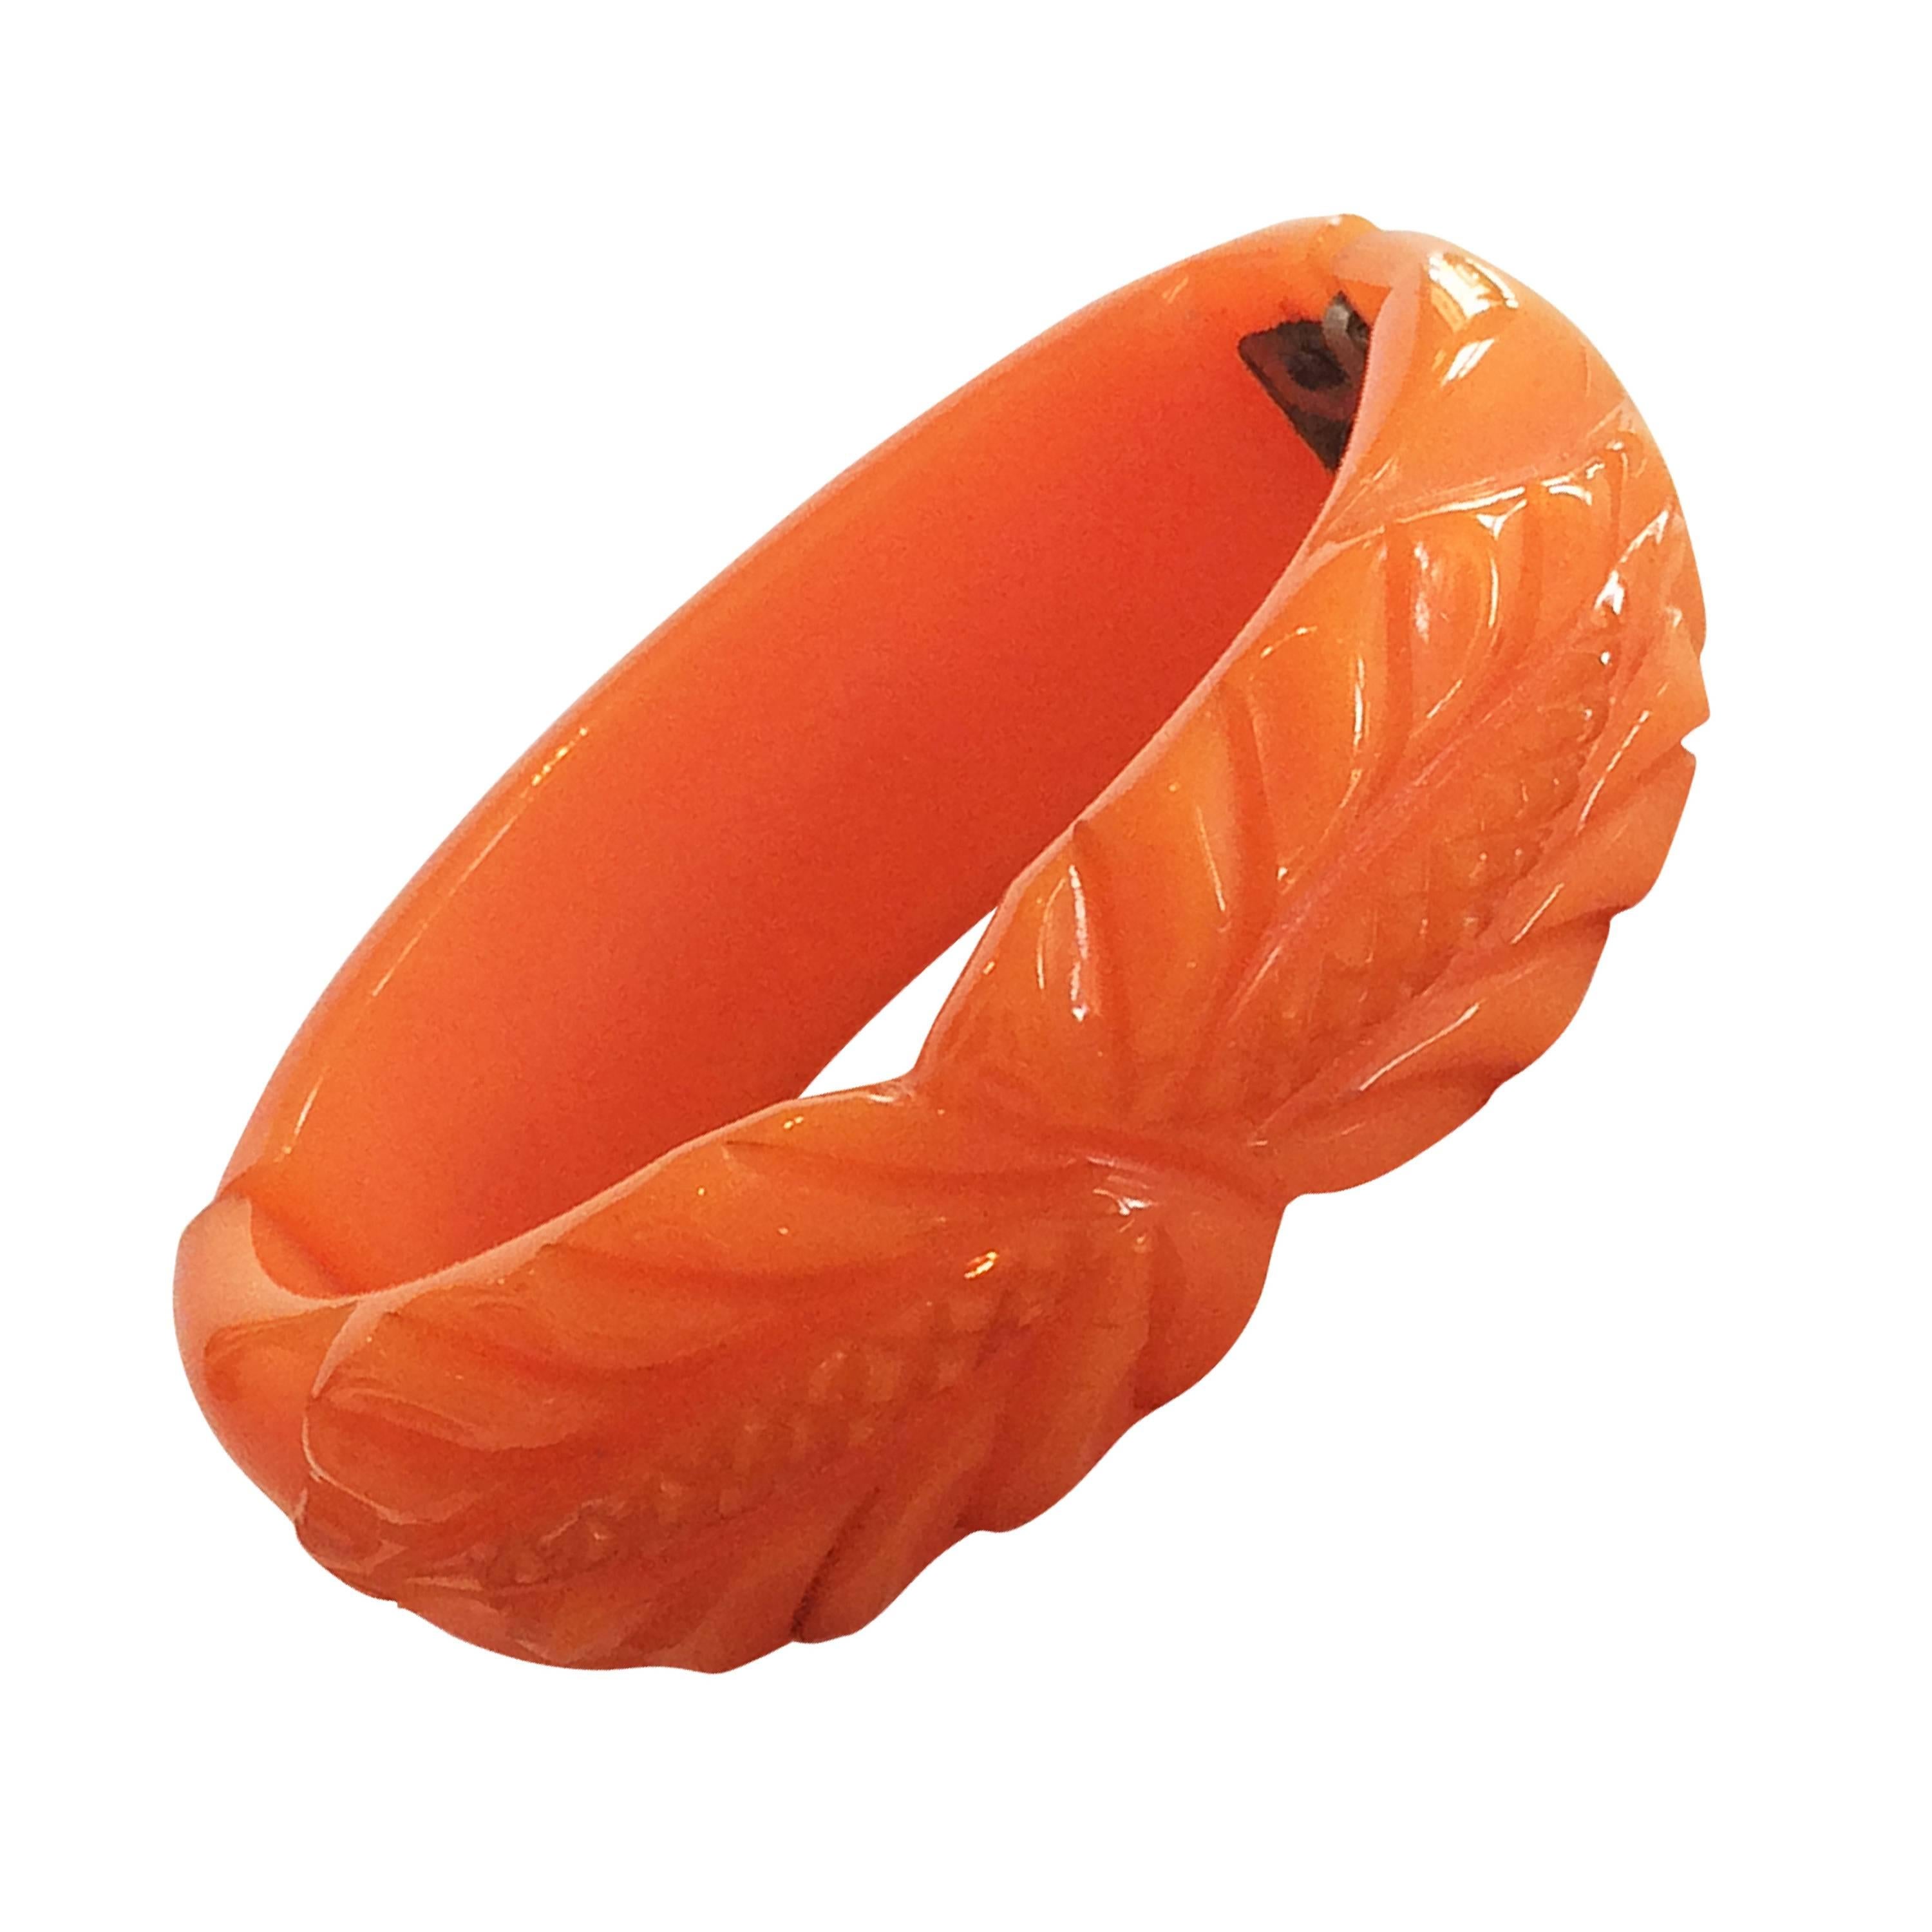 Art Deco tangerine Bakelite carved bangle or clamper bracelet